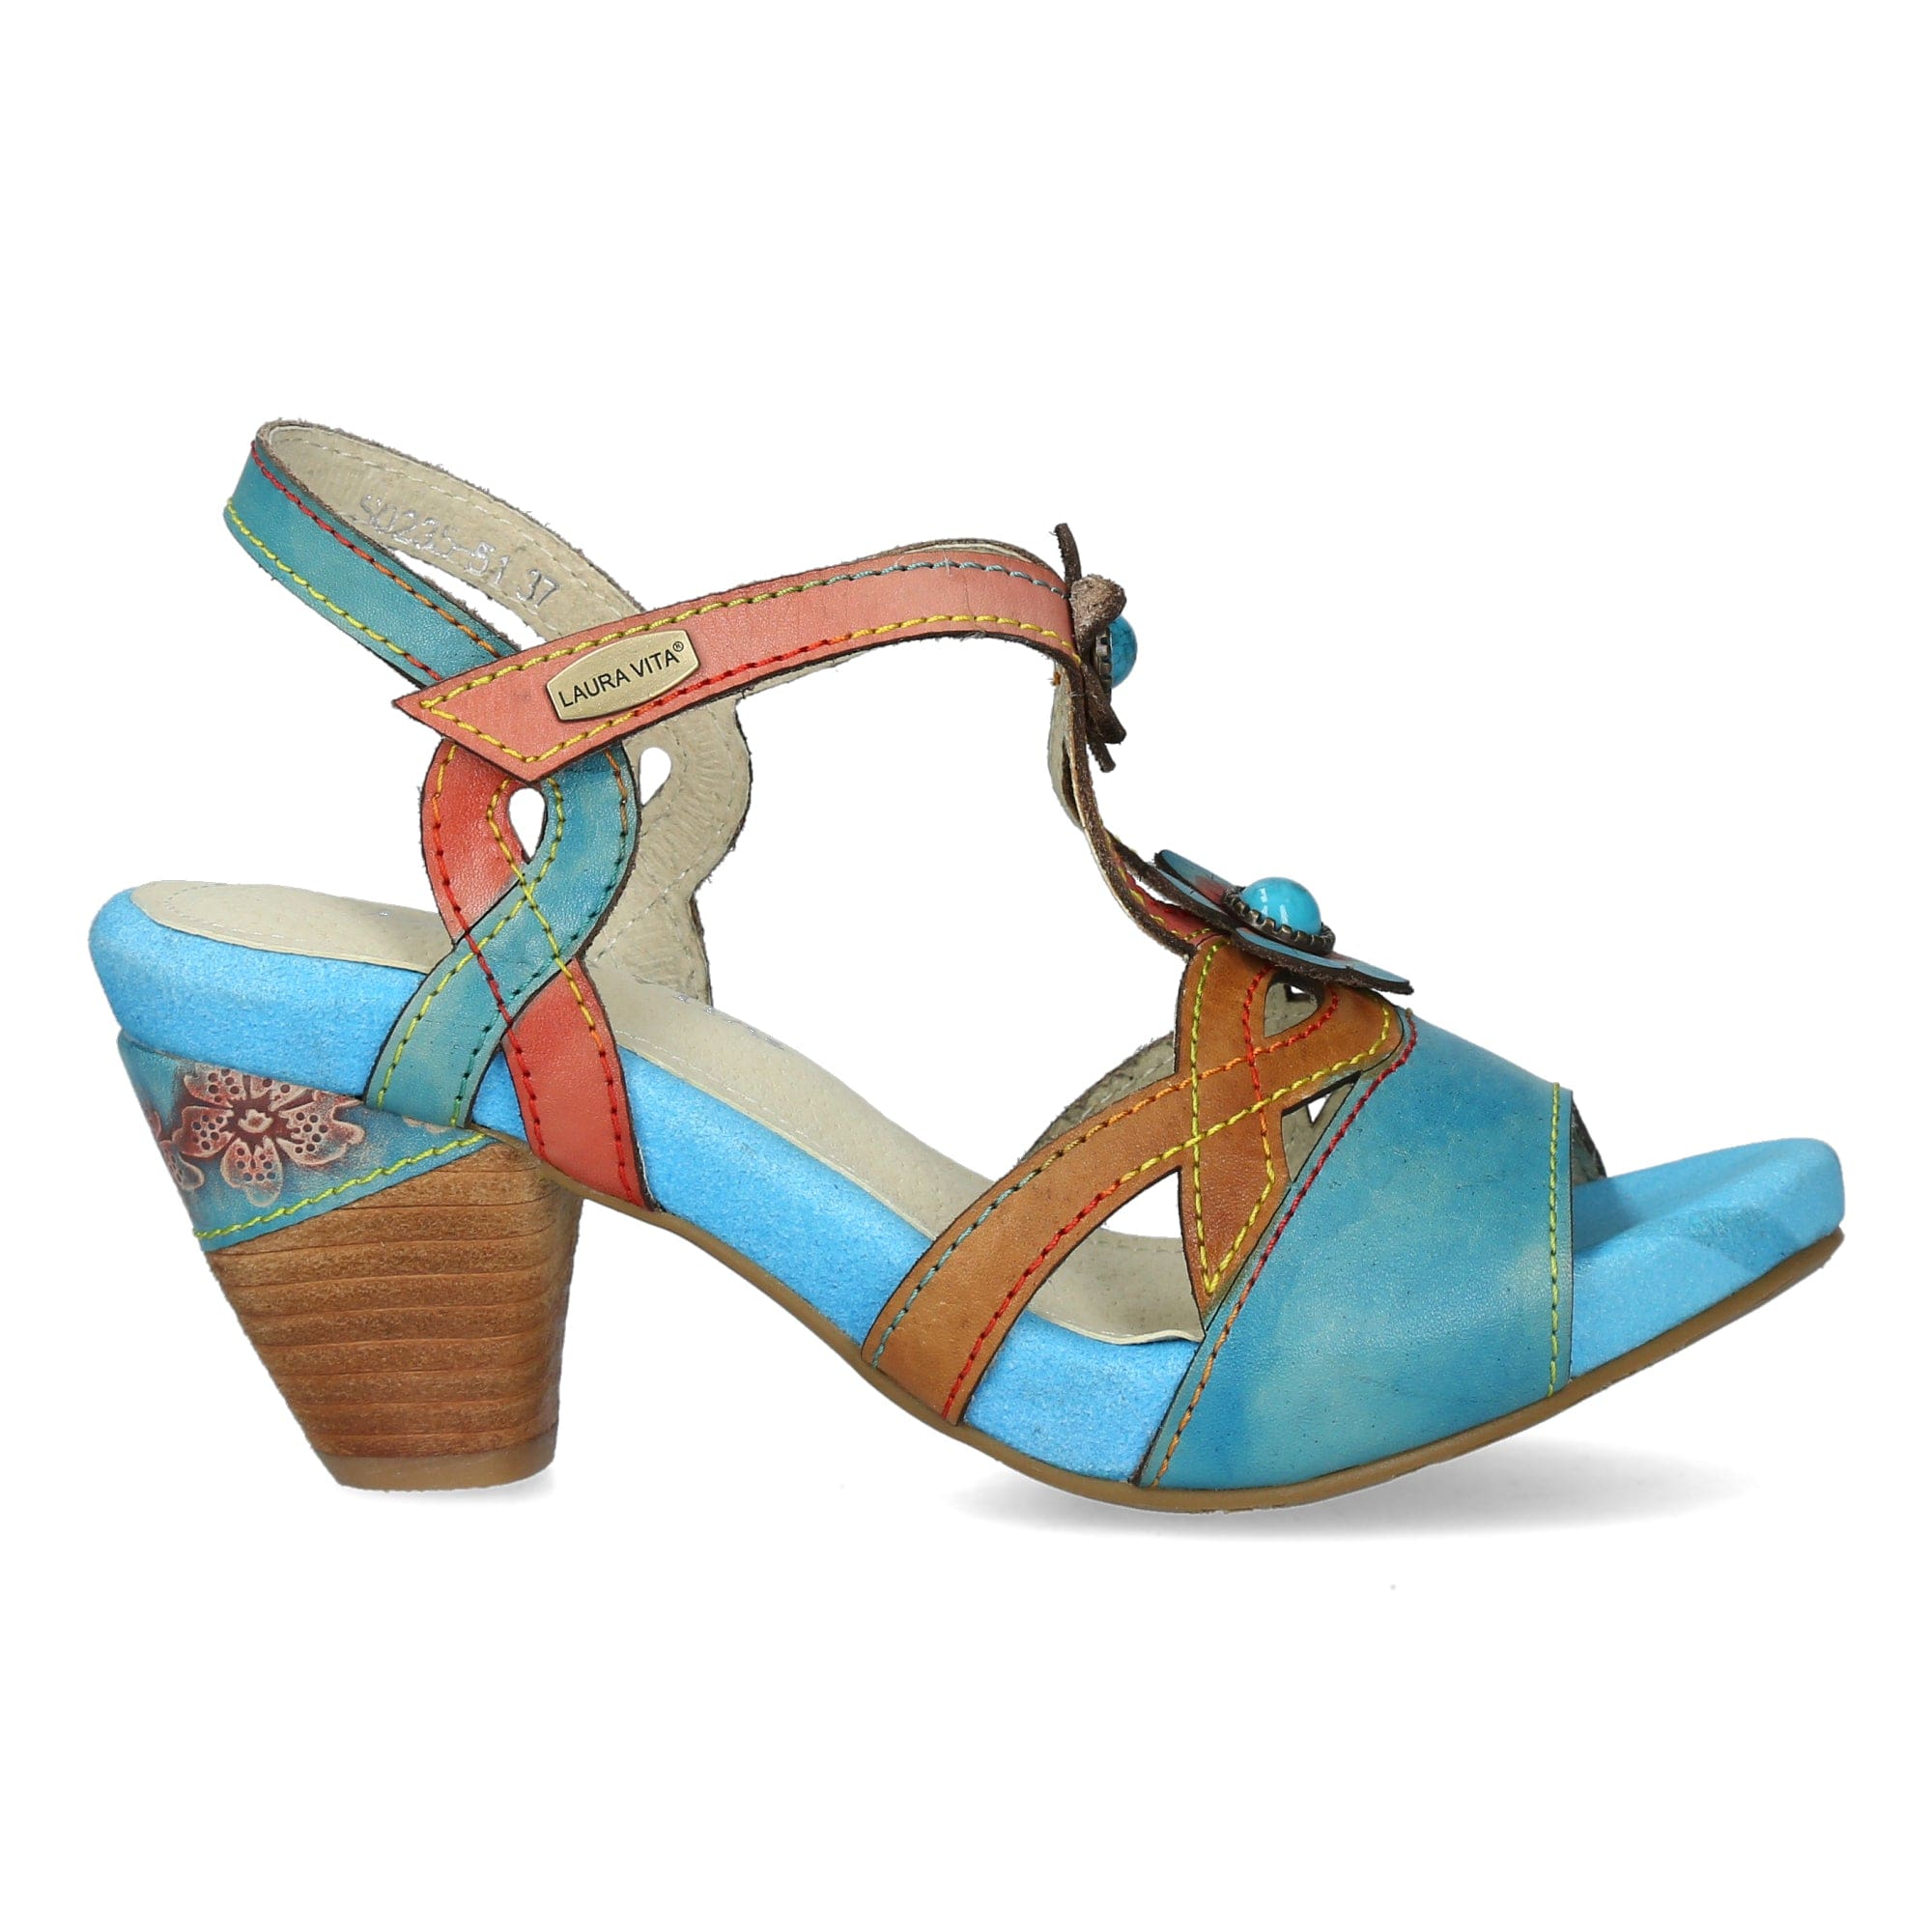 Chaussure DACXO 51 - 35 / Turquoise - Sandale